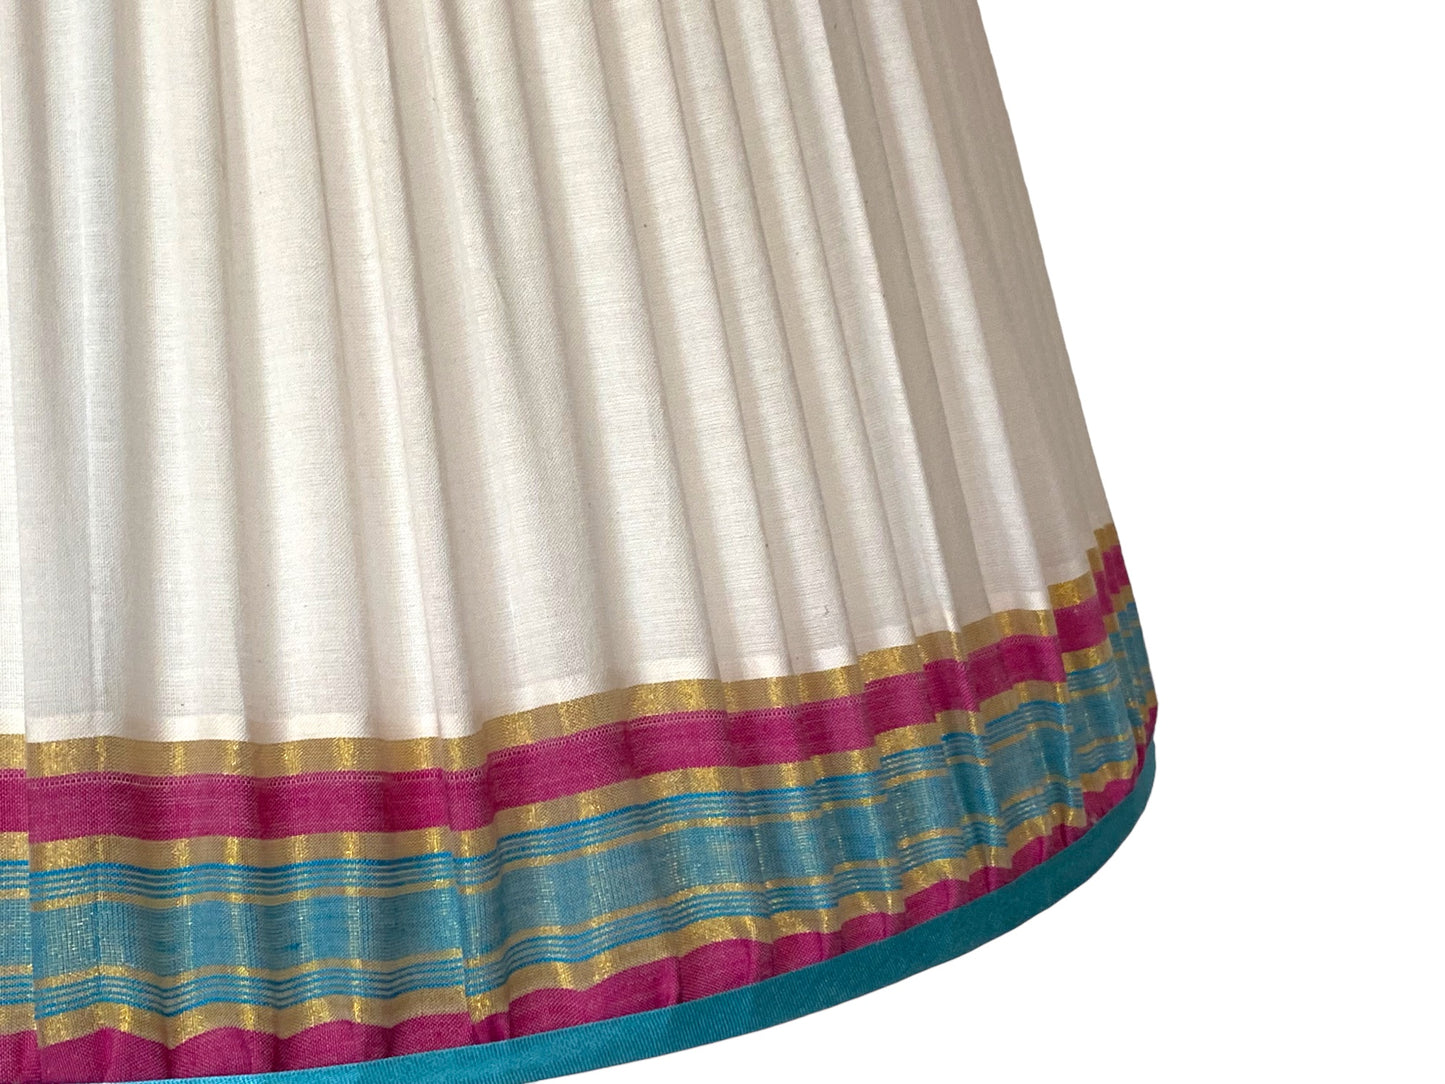 Blue and pink Keralan sari lampshade close up